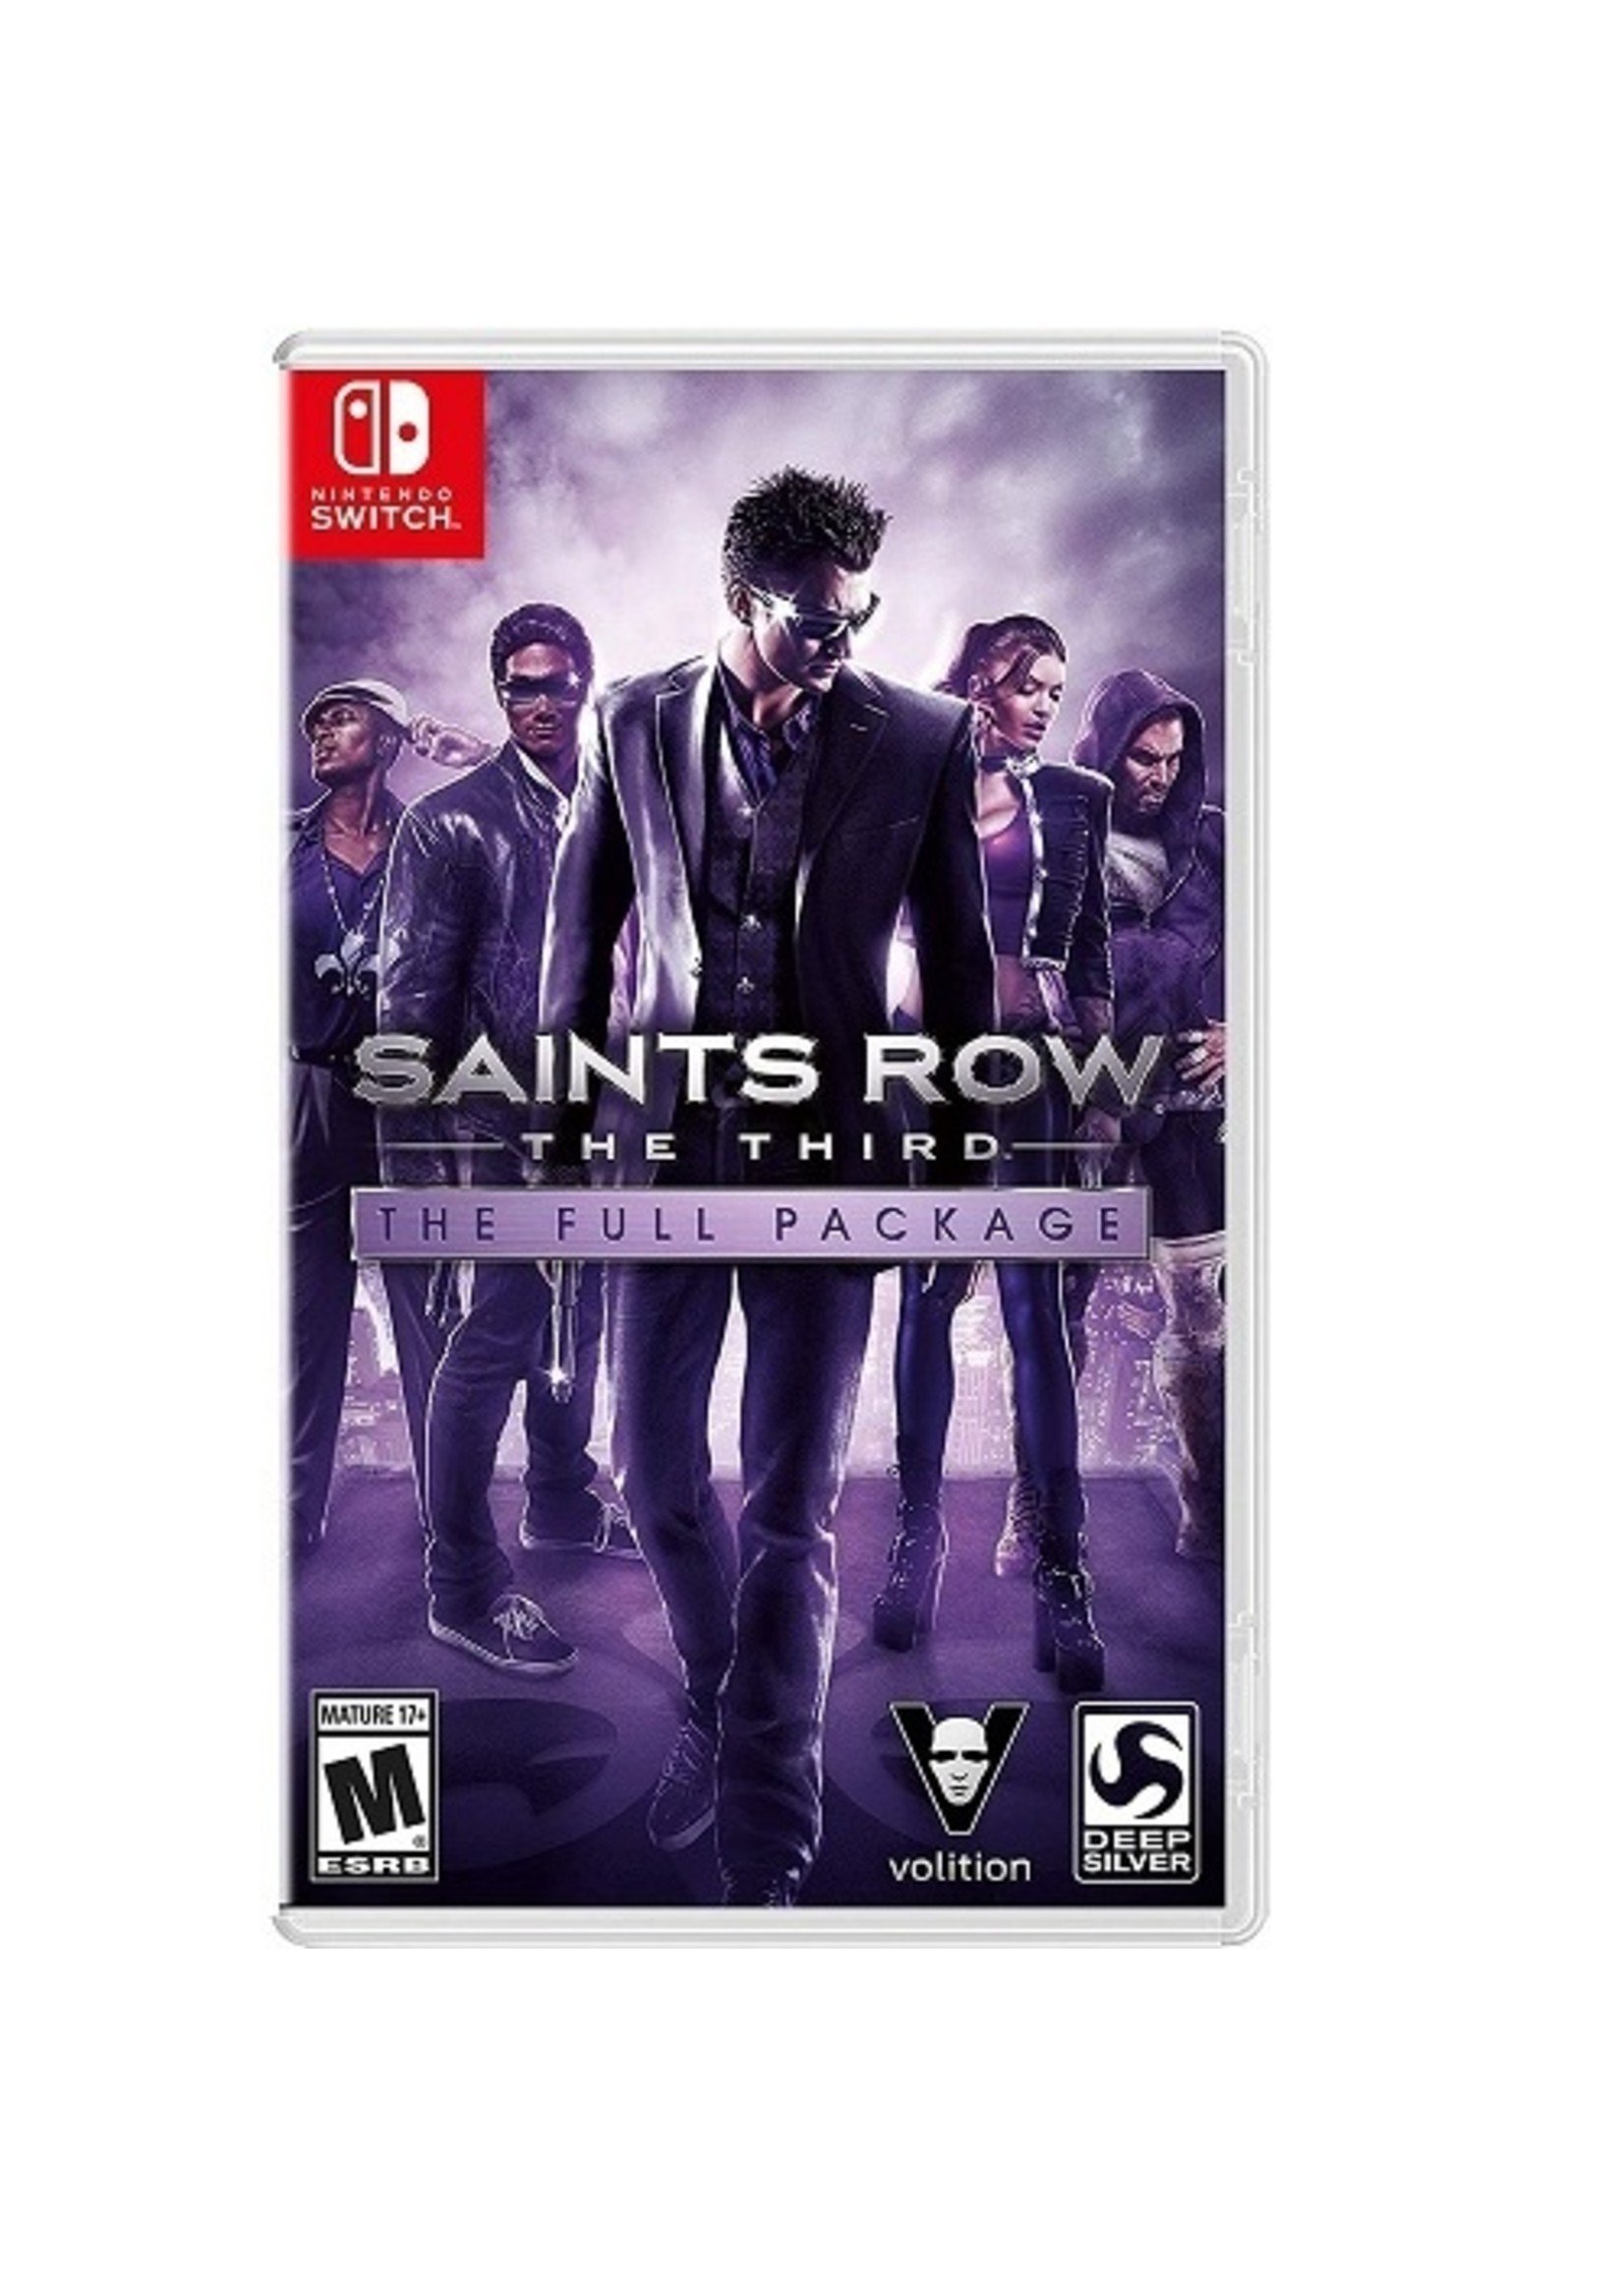 free download saints row switch